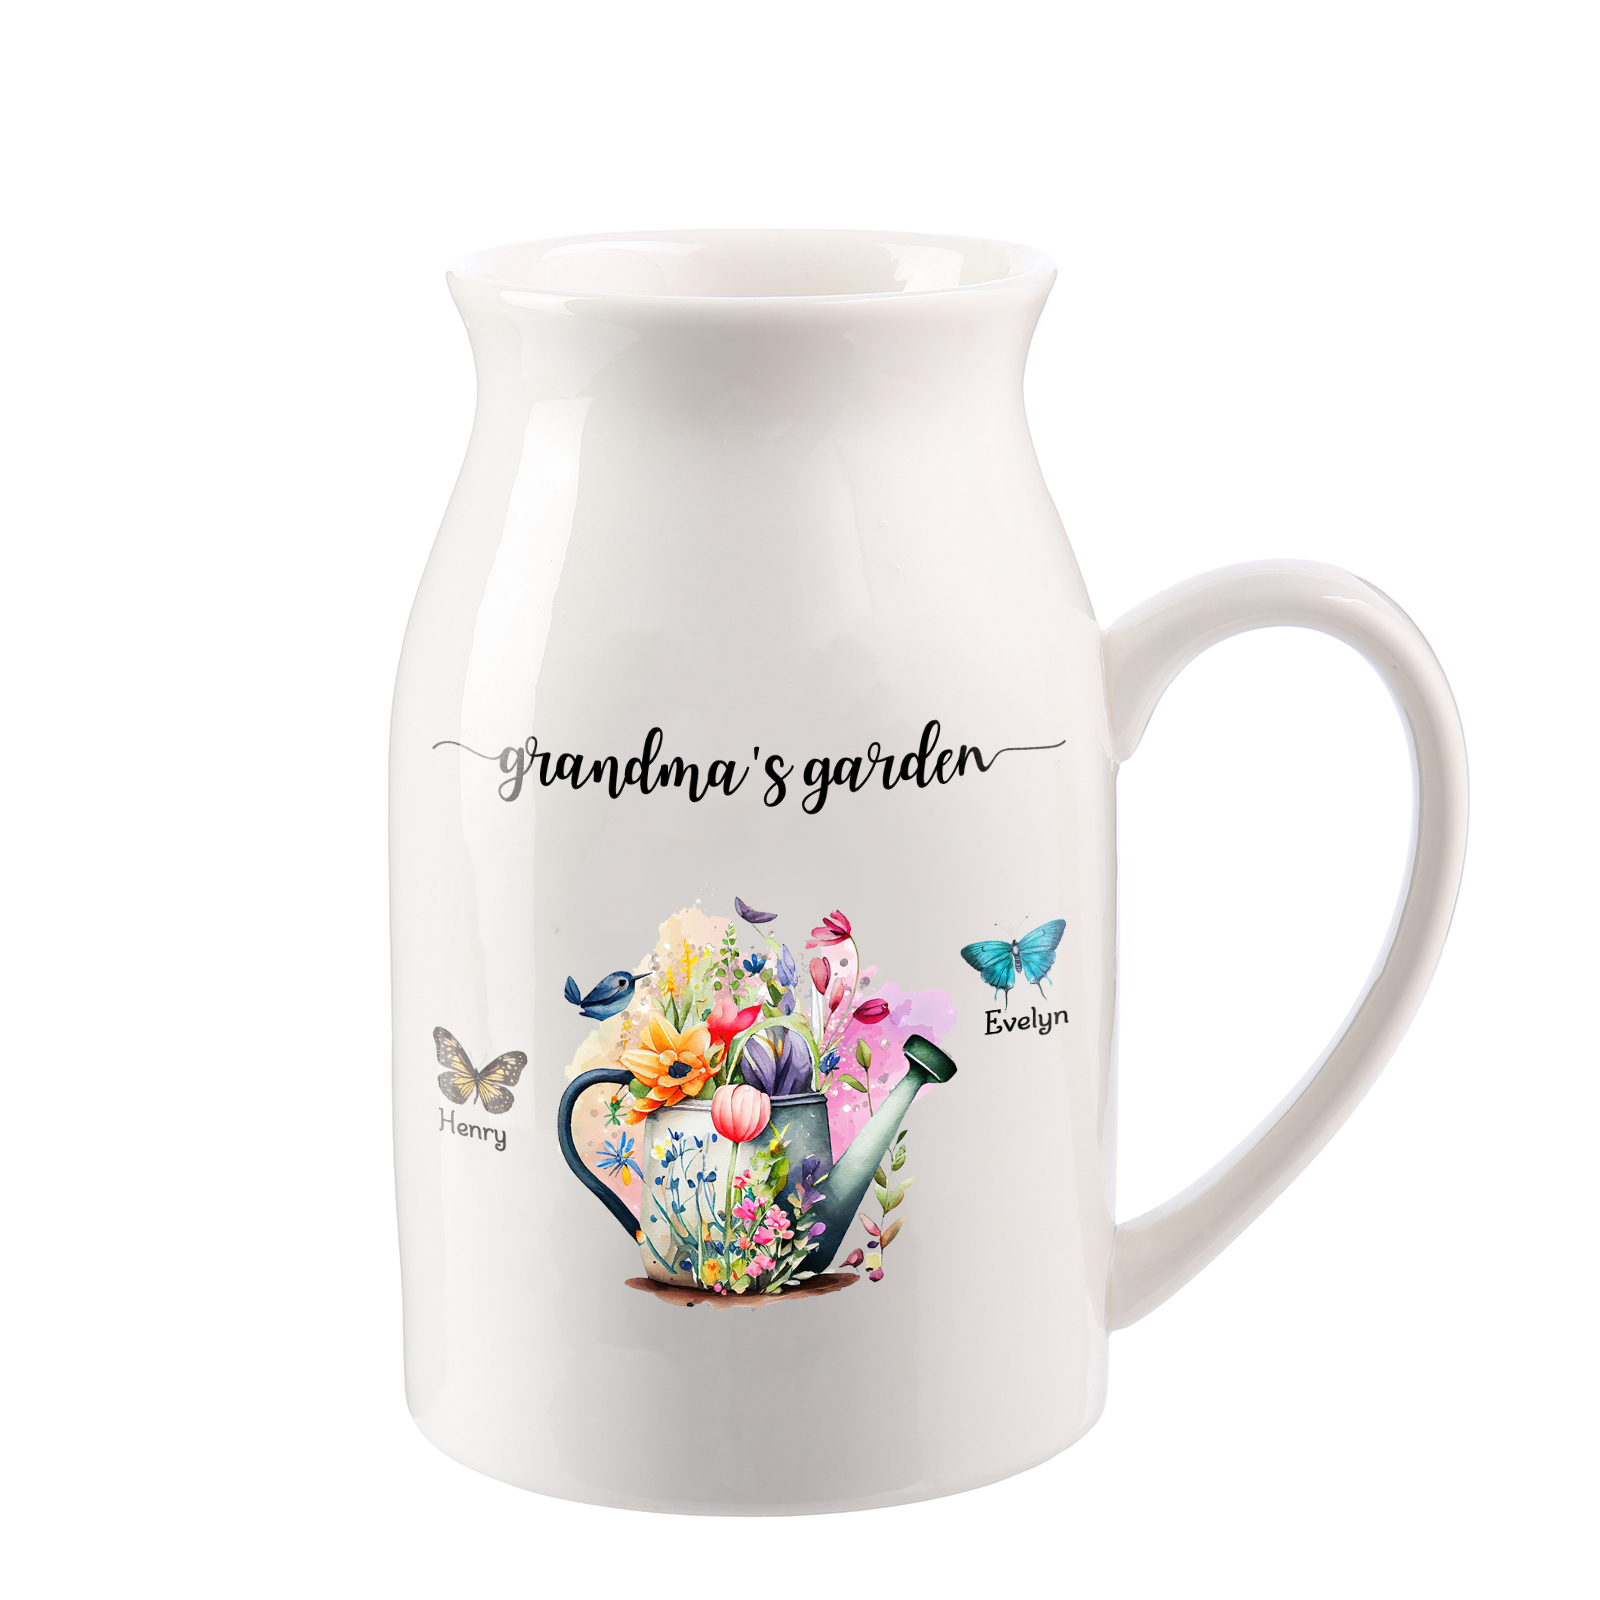 2 Names - Personalized Name "Grandma's Garden" Ceramic Vase as a Gift 